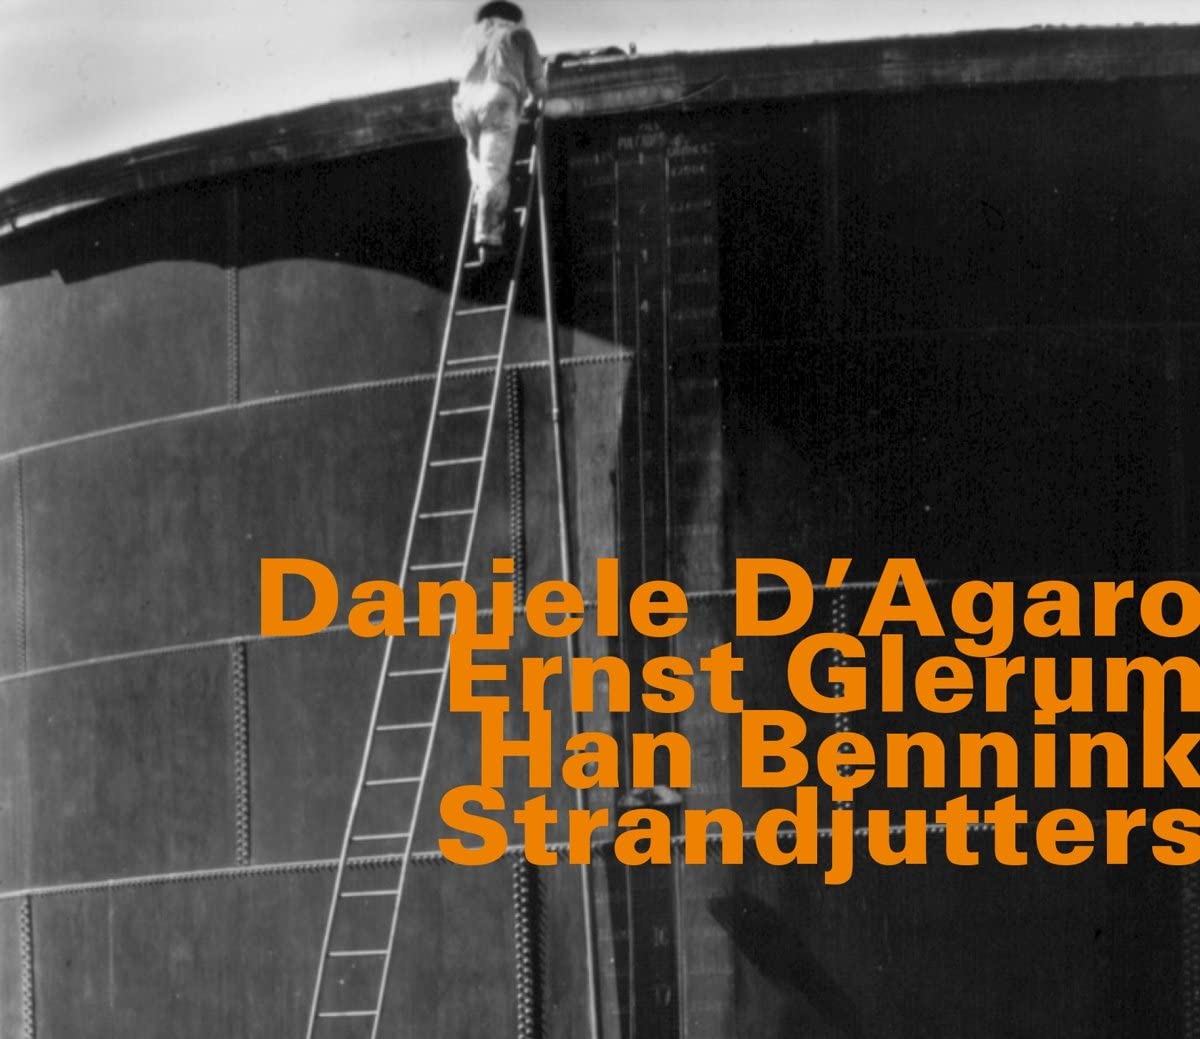 D'Agaro/Glerum/Bennink: Strandjutters